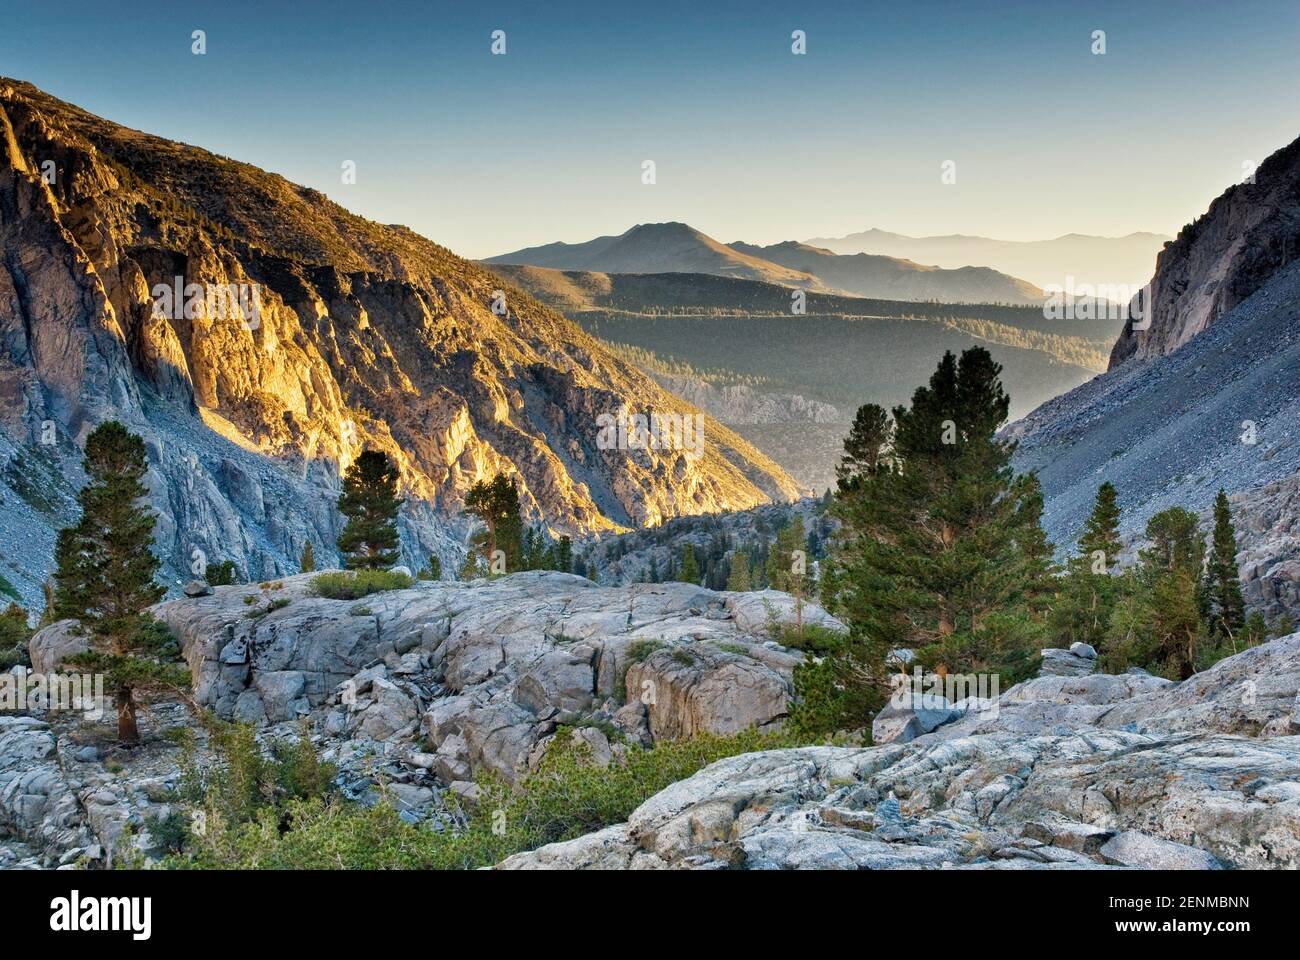 Big Pine Creek Canyon, White Mountains in dist, sunrise, The Palisades, John Muir Wilderness, Eastern Sierra Nevada, California, USA Stock Photo